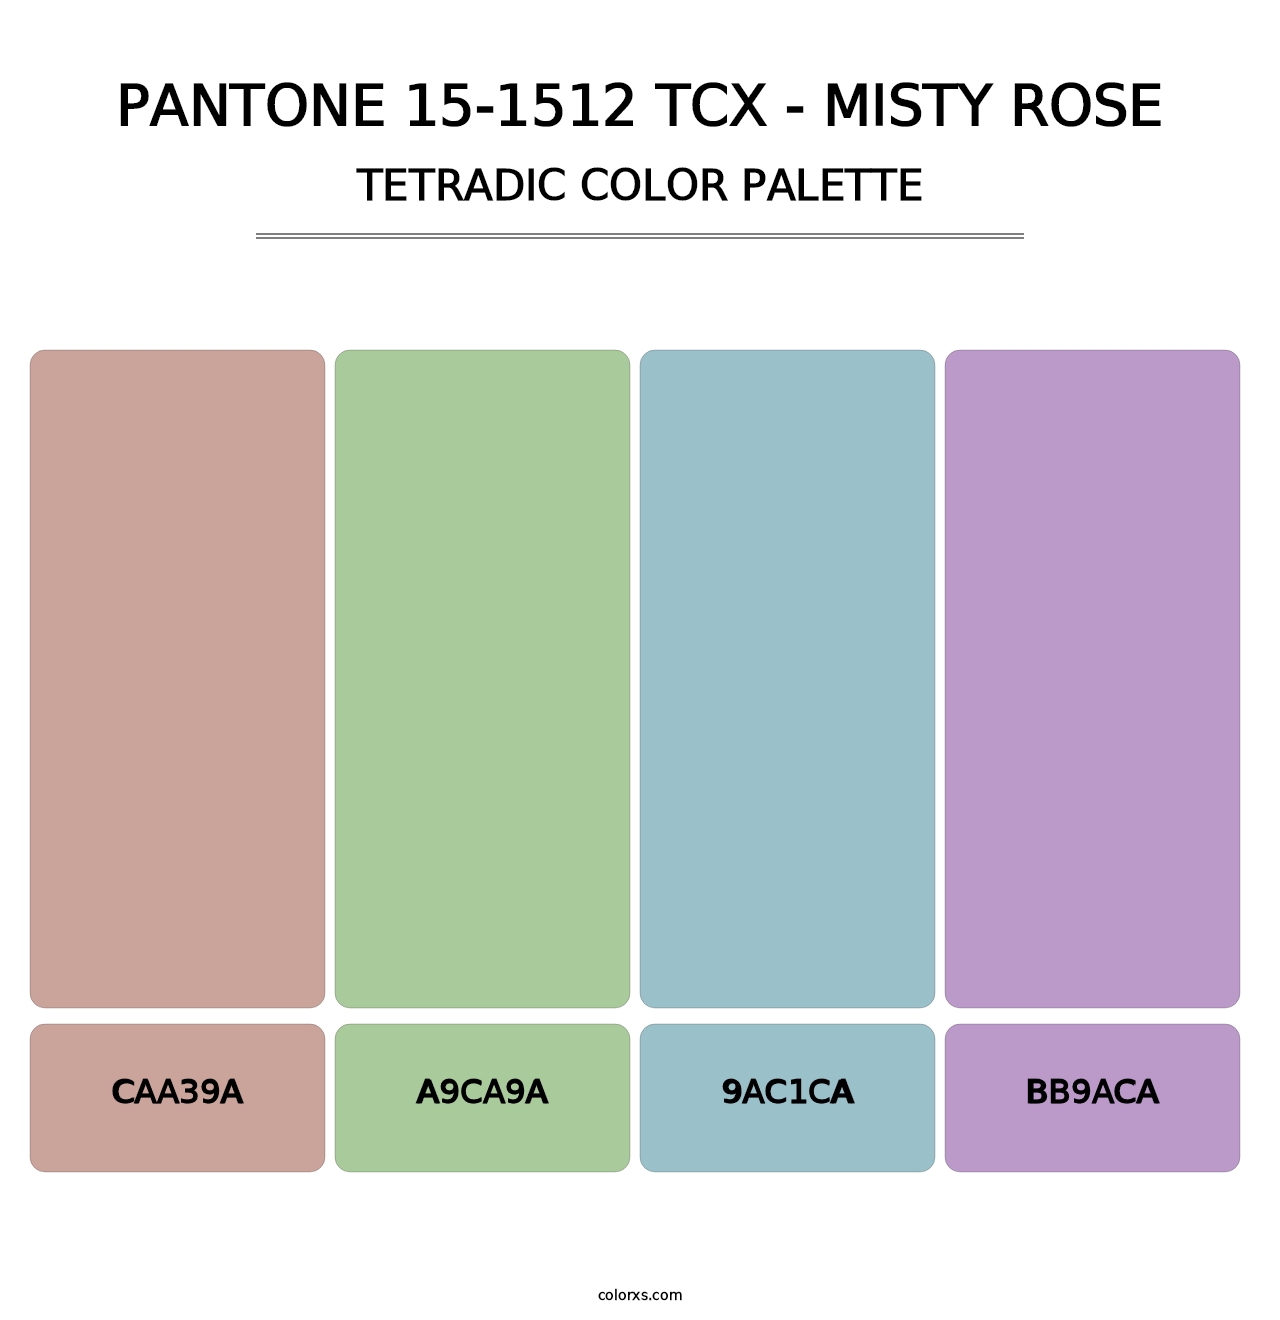 PANTONE 15-1512 TCX - Misty Rose - Tetradic Color Palette